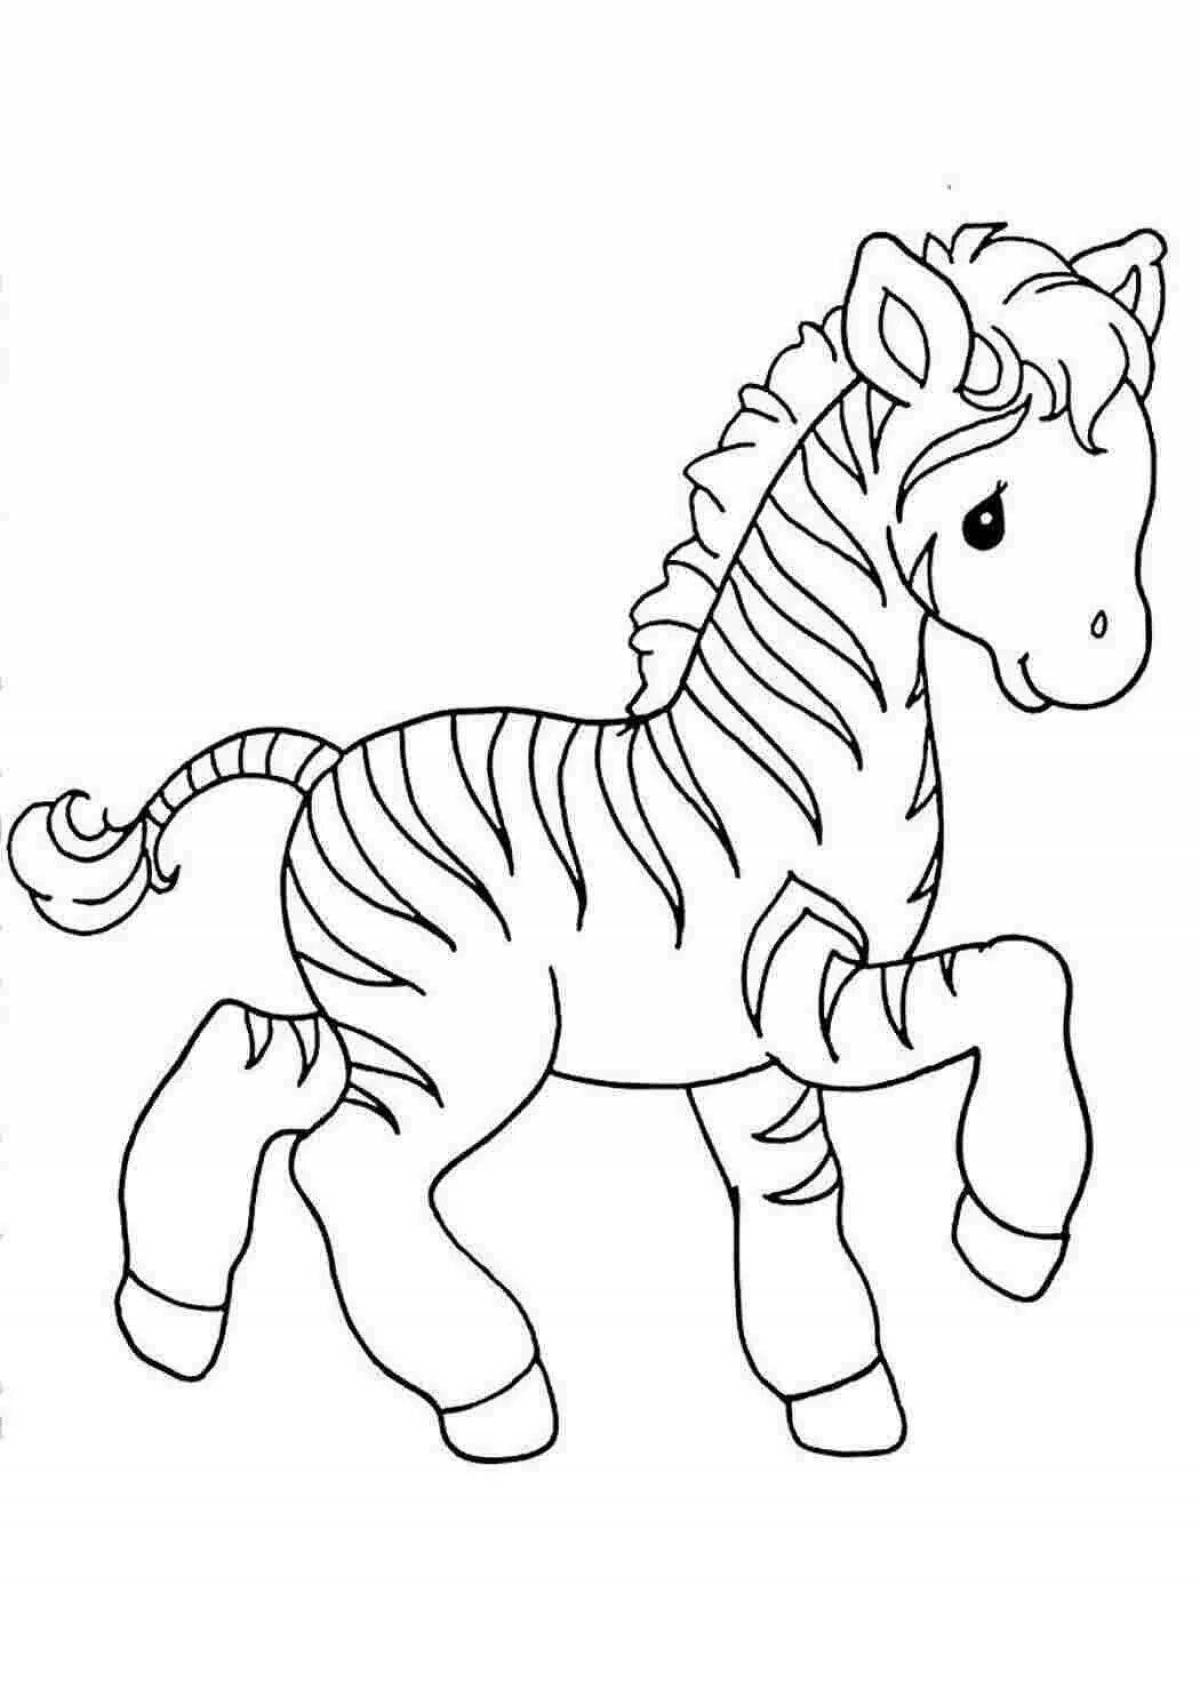 Crazy zebra coloring book for kids